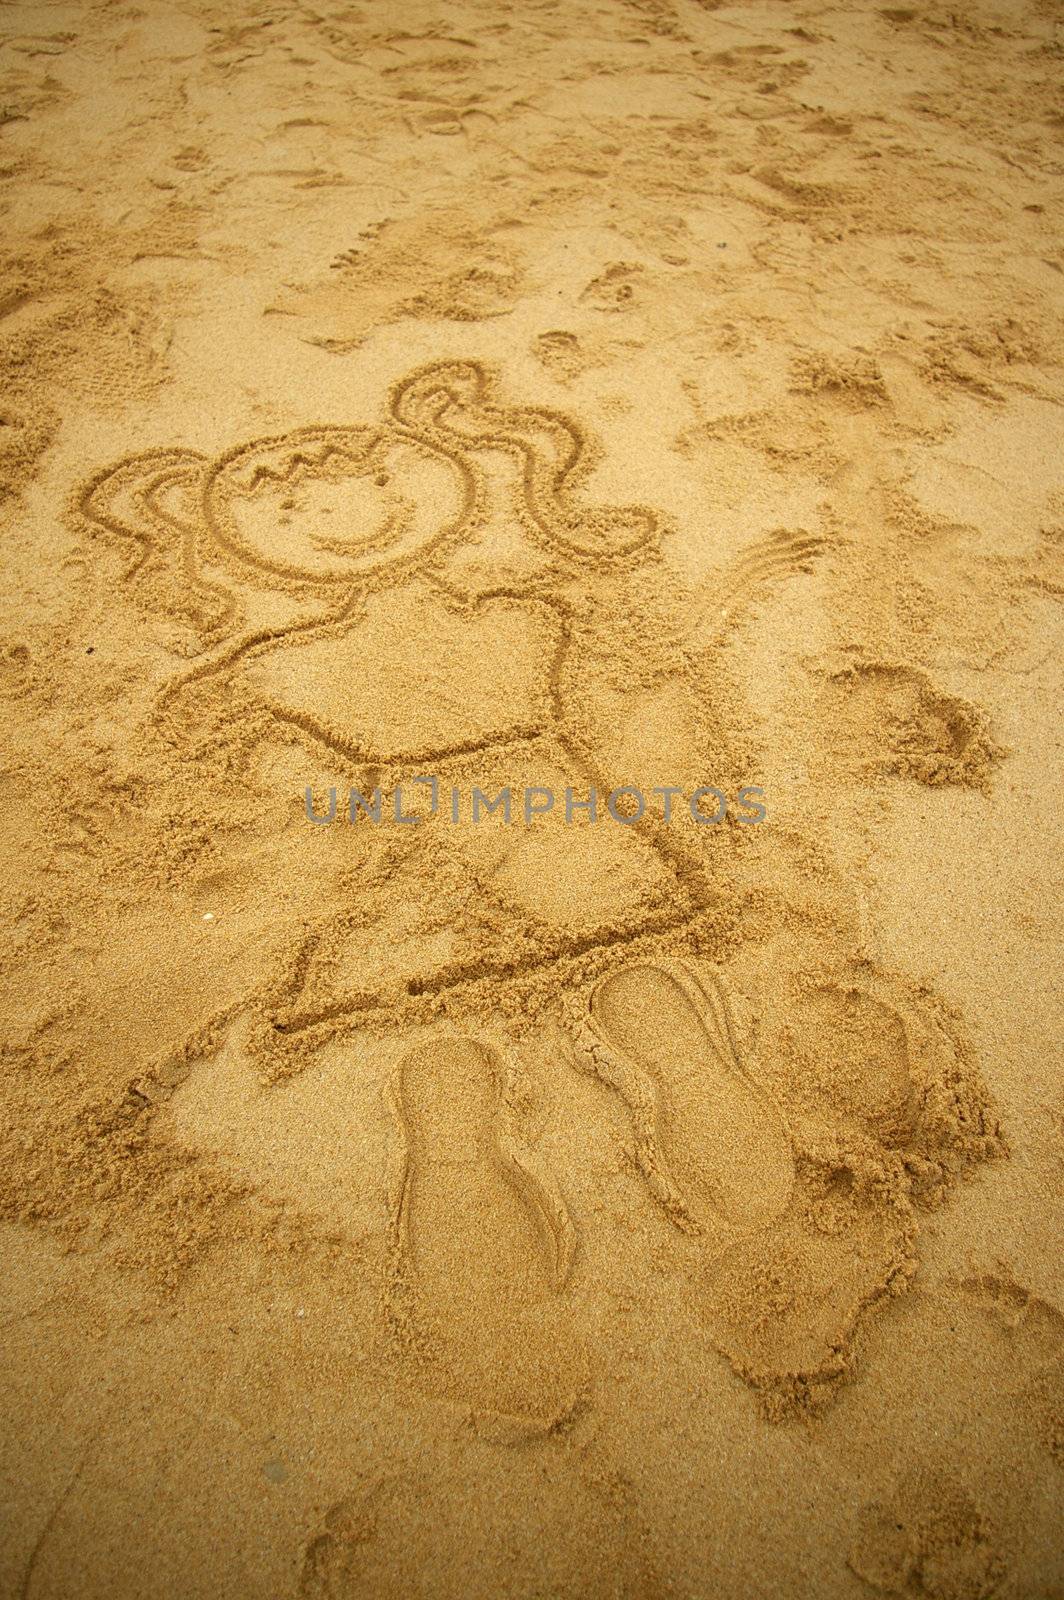 Girl drawing on beach